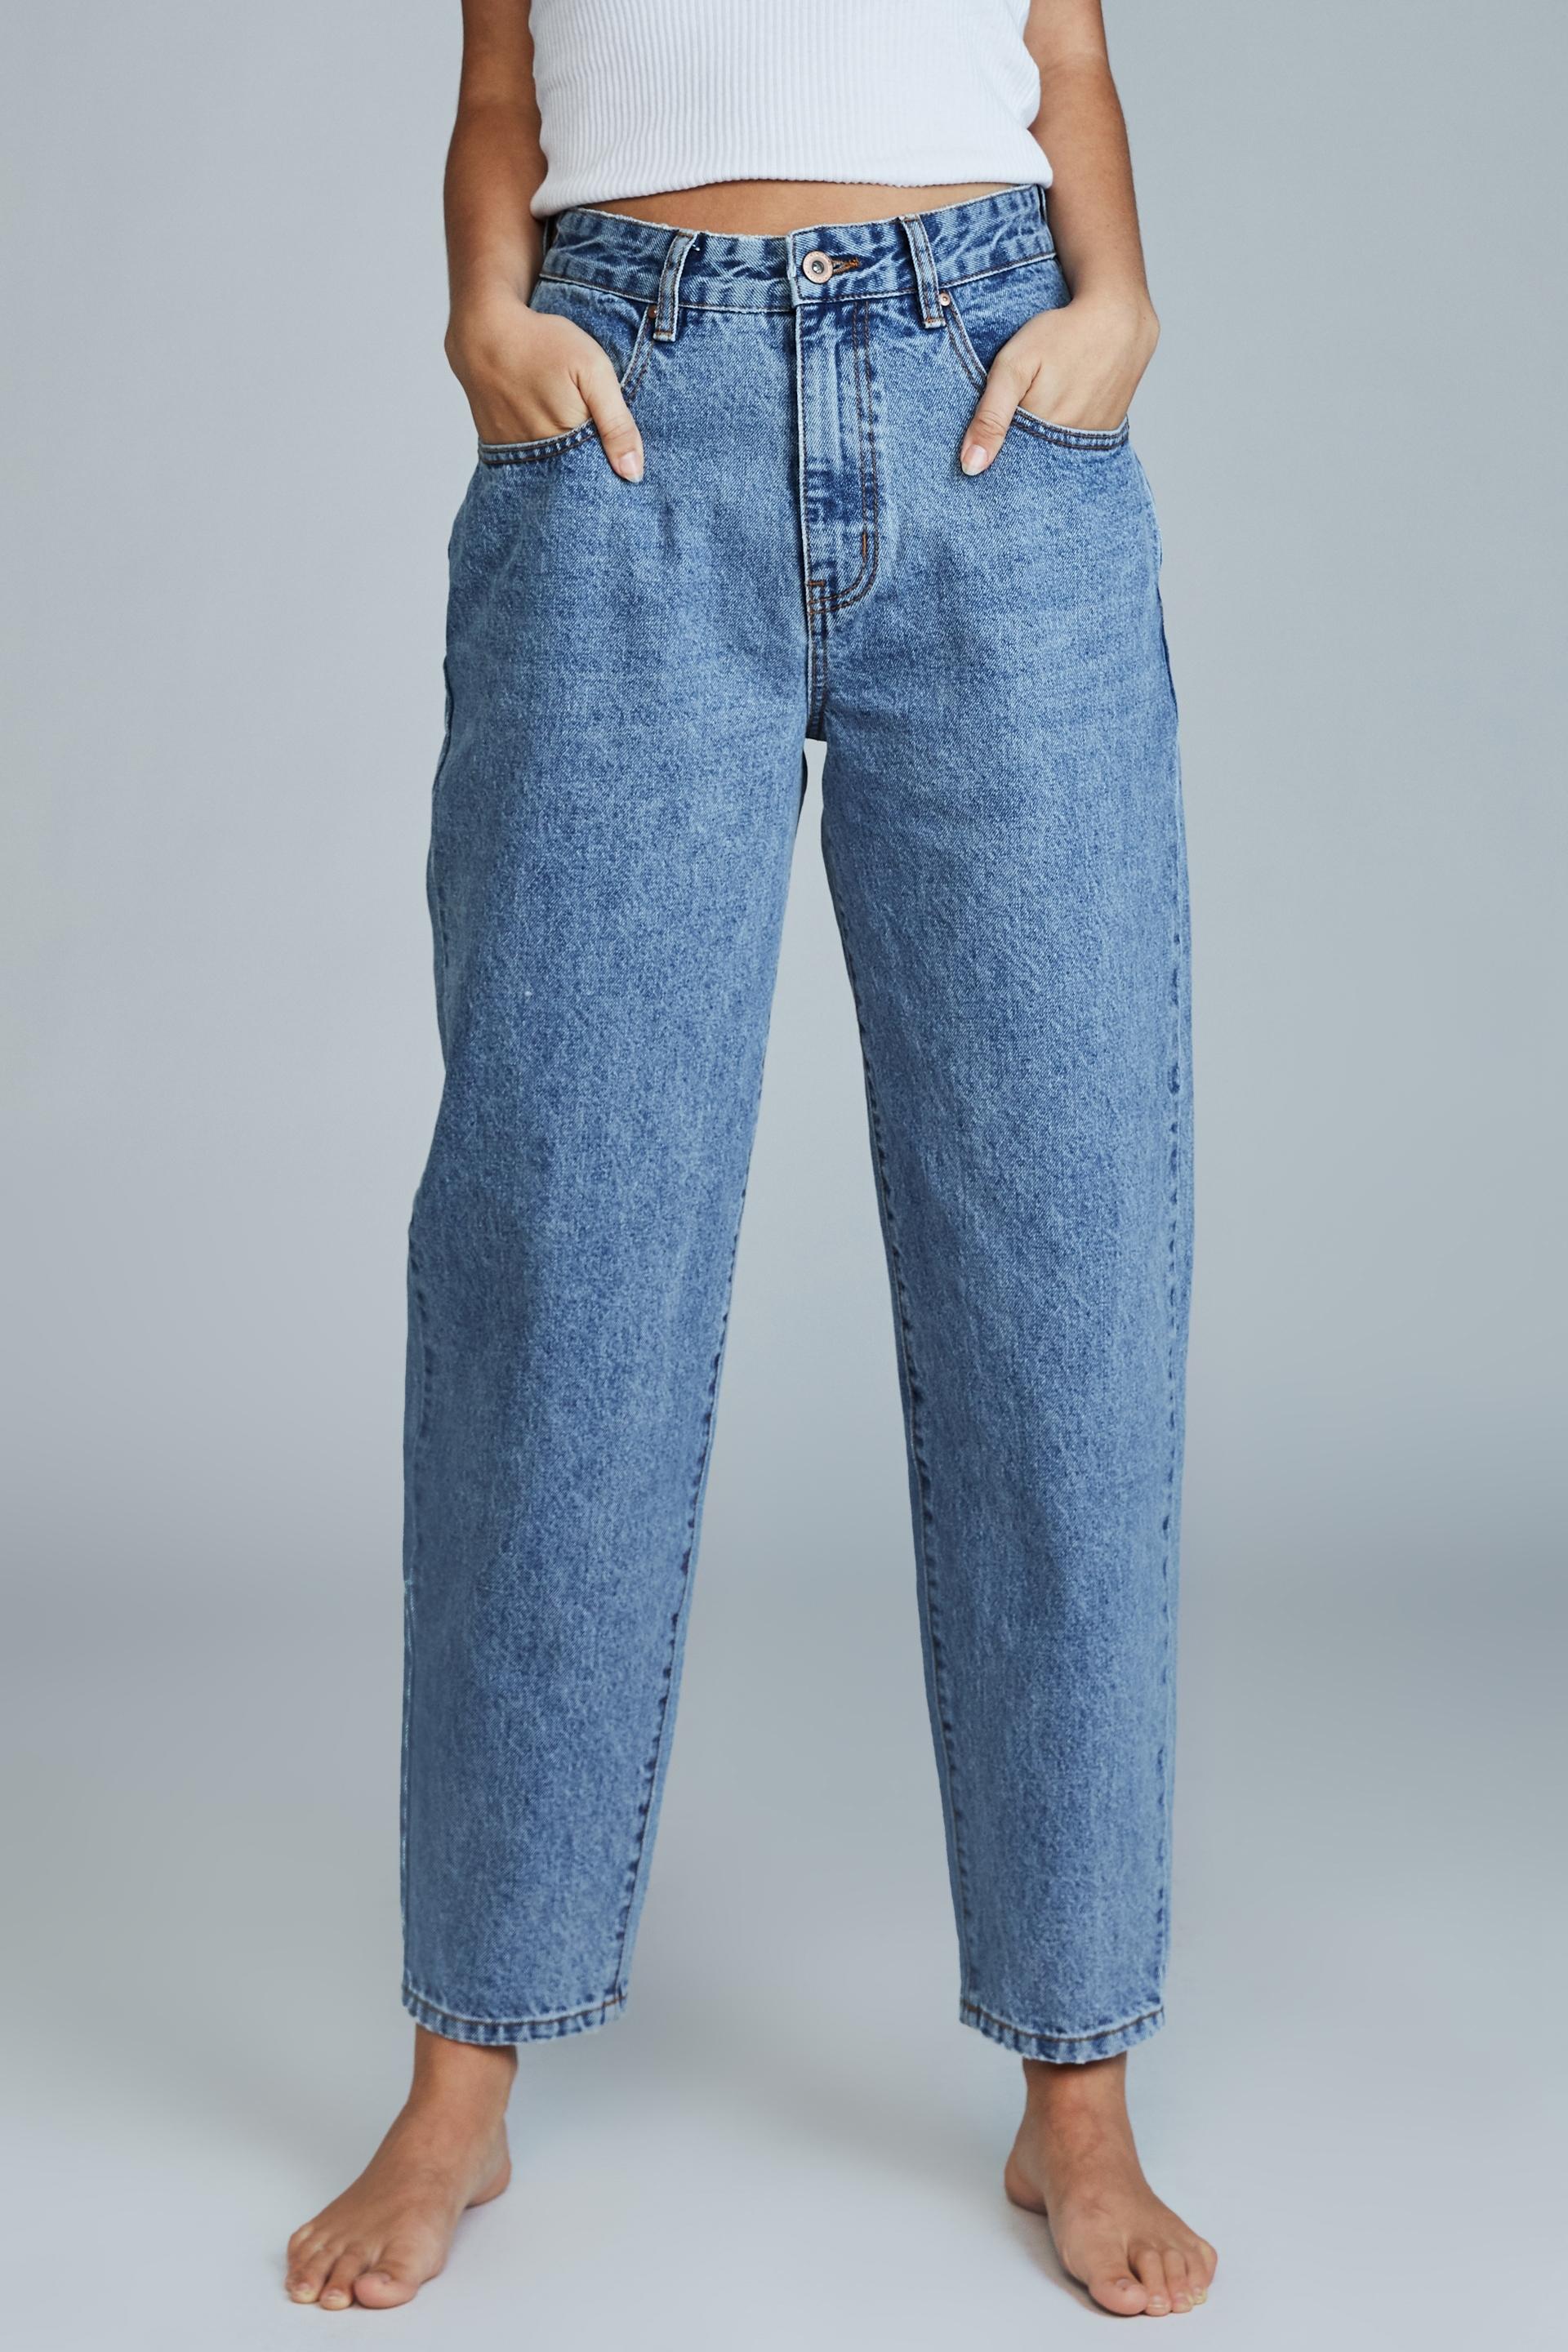 Slouch mom jean - brunswick blue Cotton On Jeans | Superbalist.com